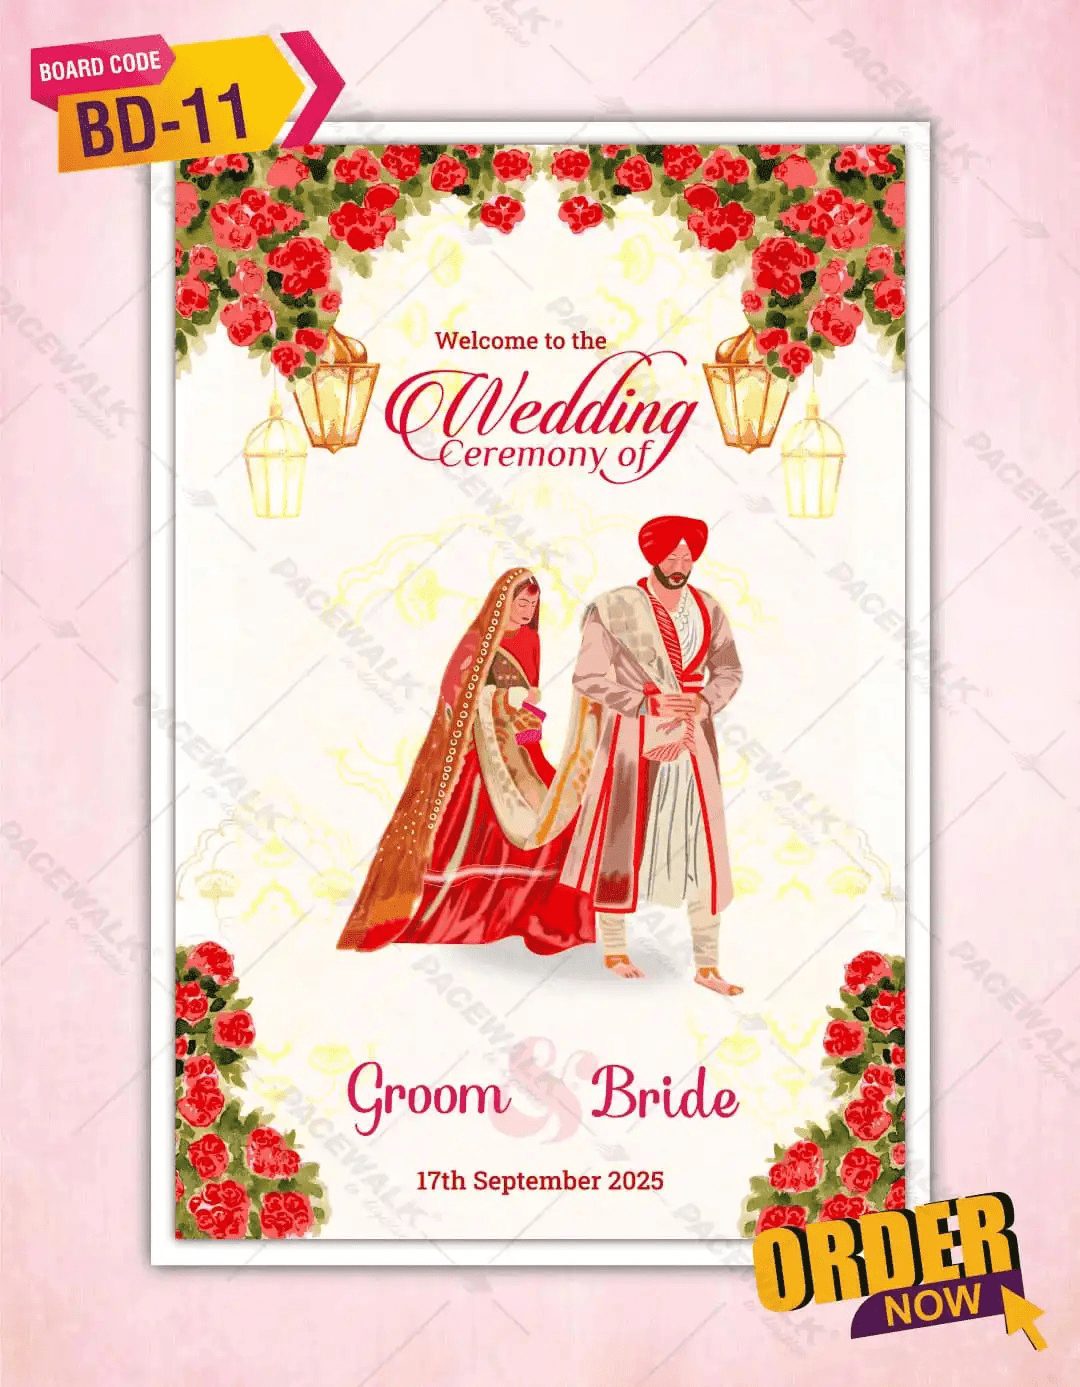 Sikh Wedding Signage Board Design